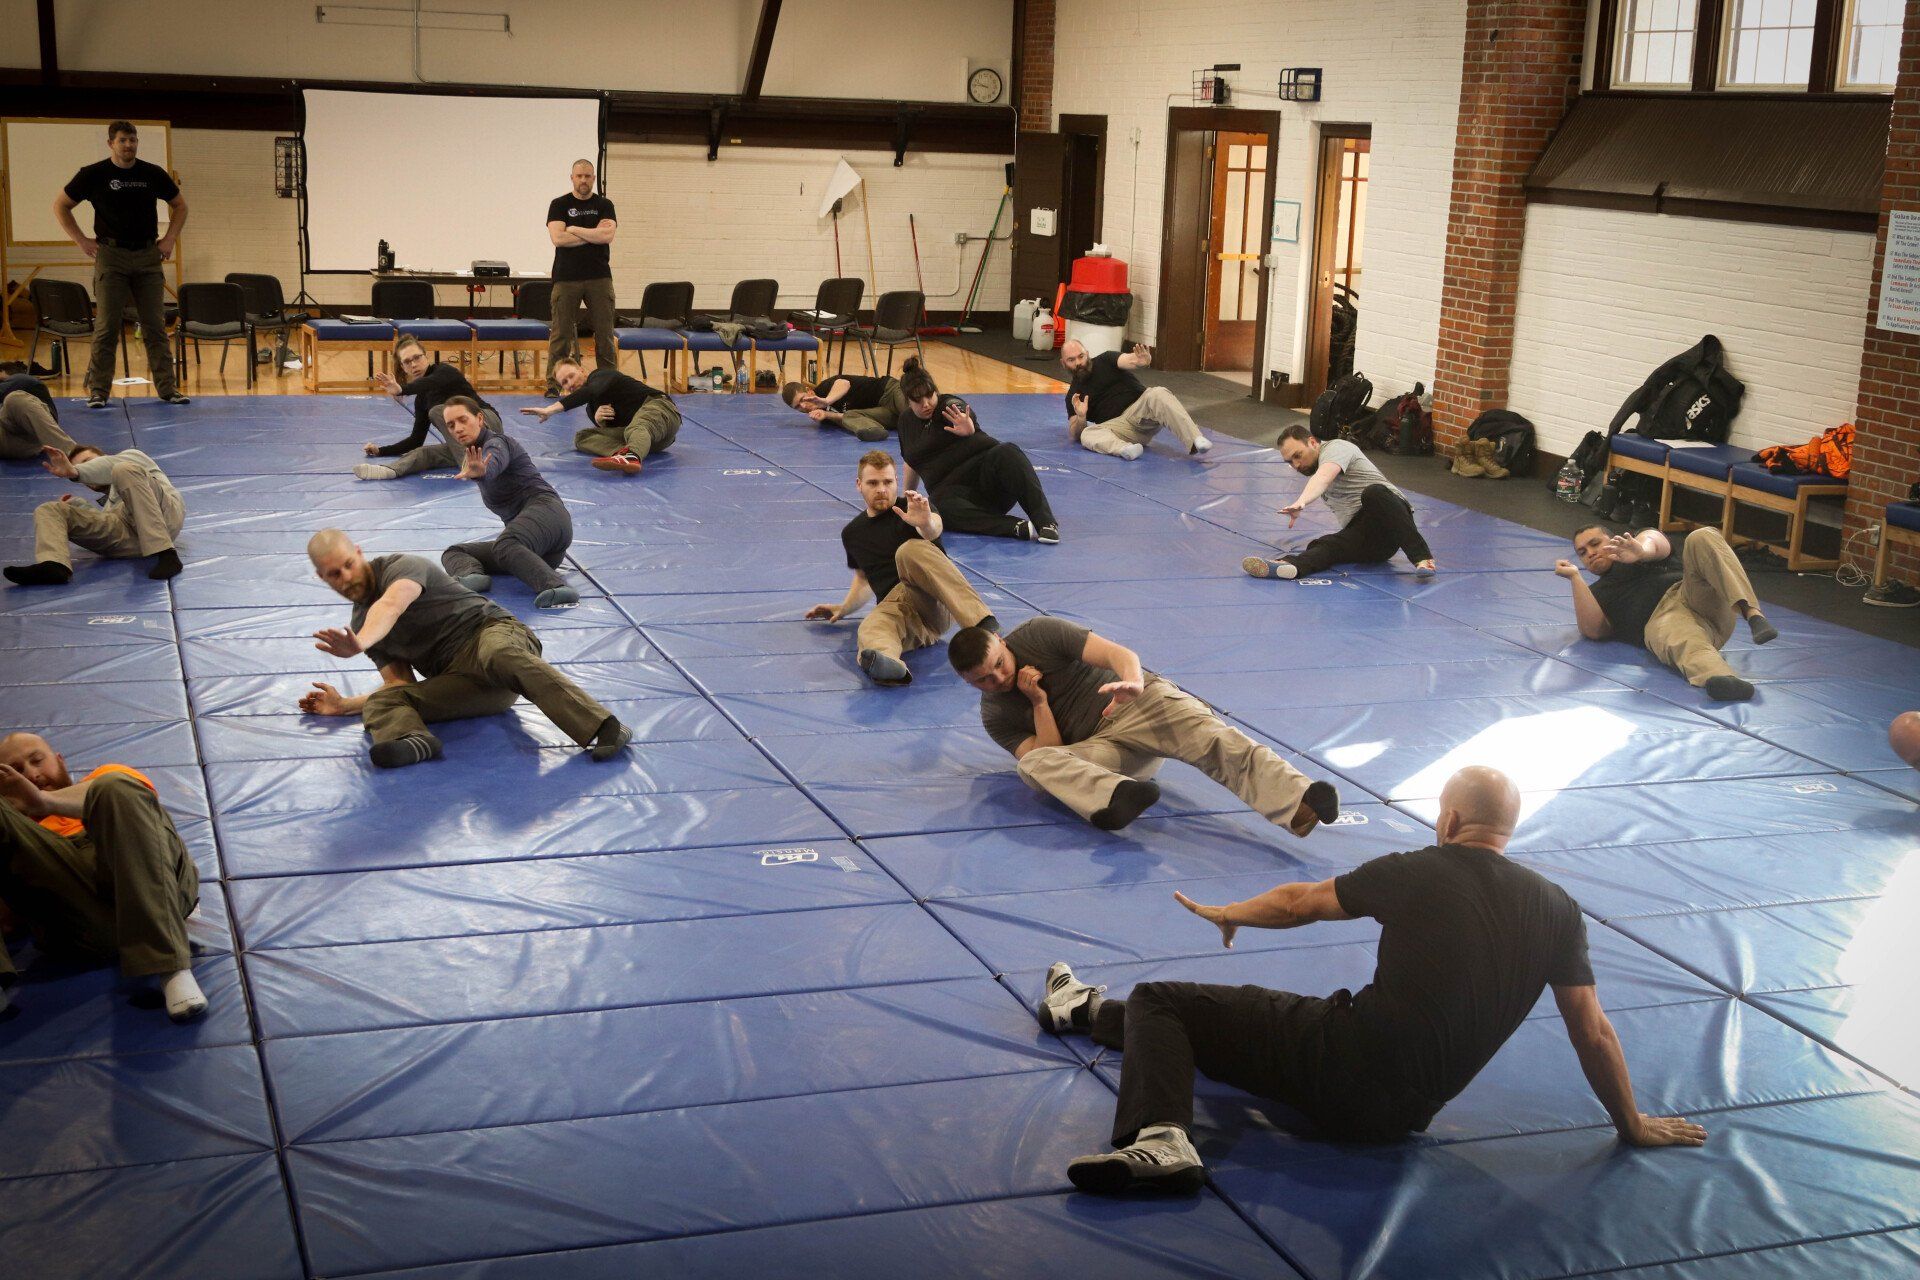 ground tactics training on mats